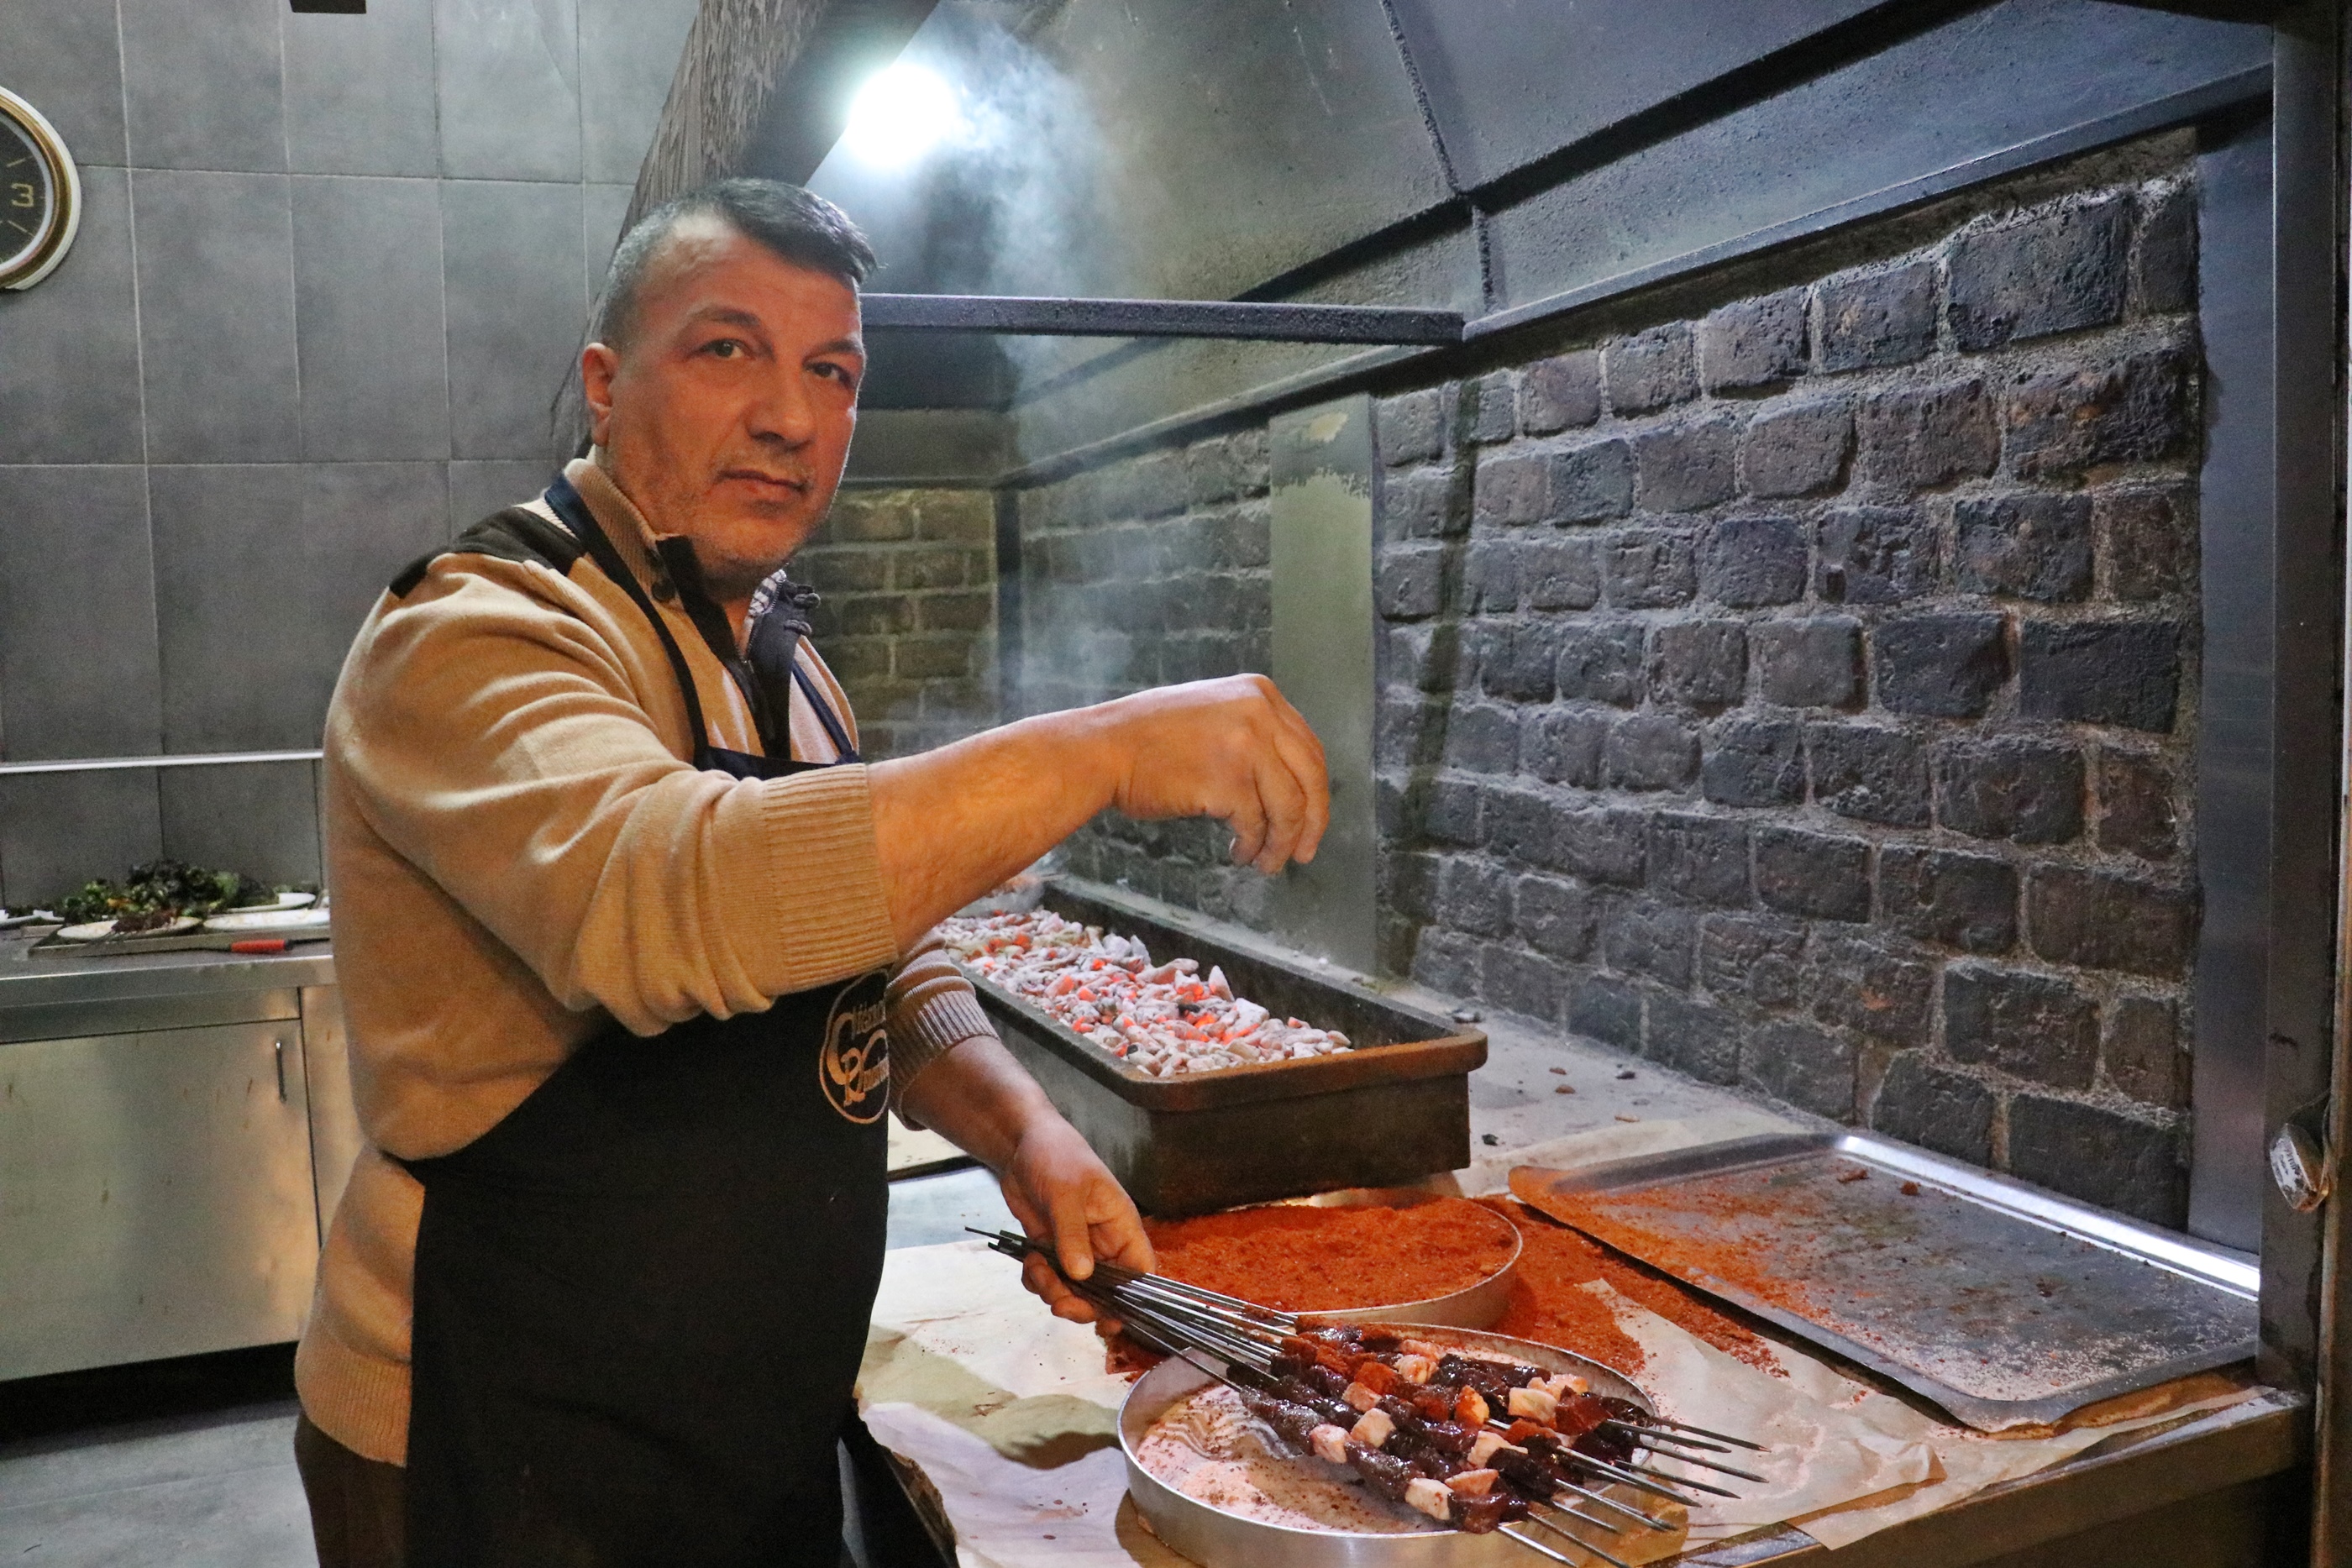 diyarbakirda-kuzu-cigerin-fiyati-eti-gecti-kasapta-kilosu-420-tl-1301-dhaphoto5.jpg